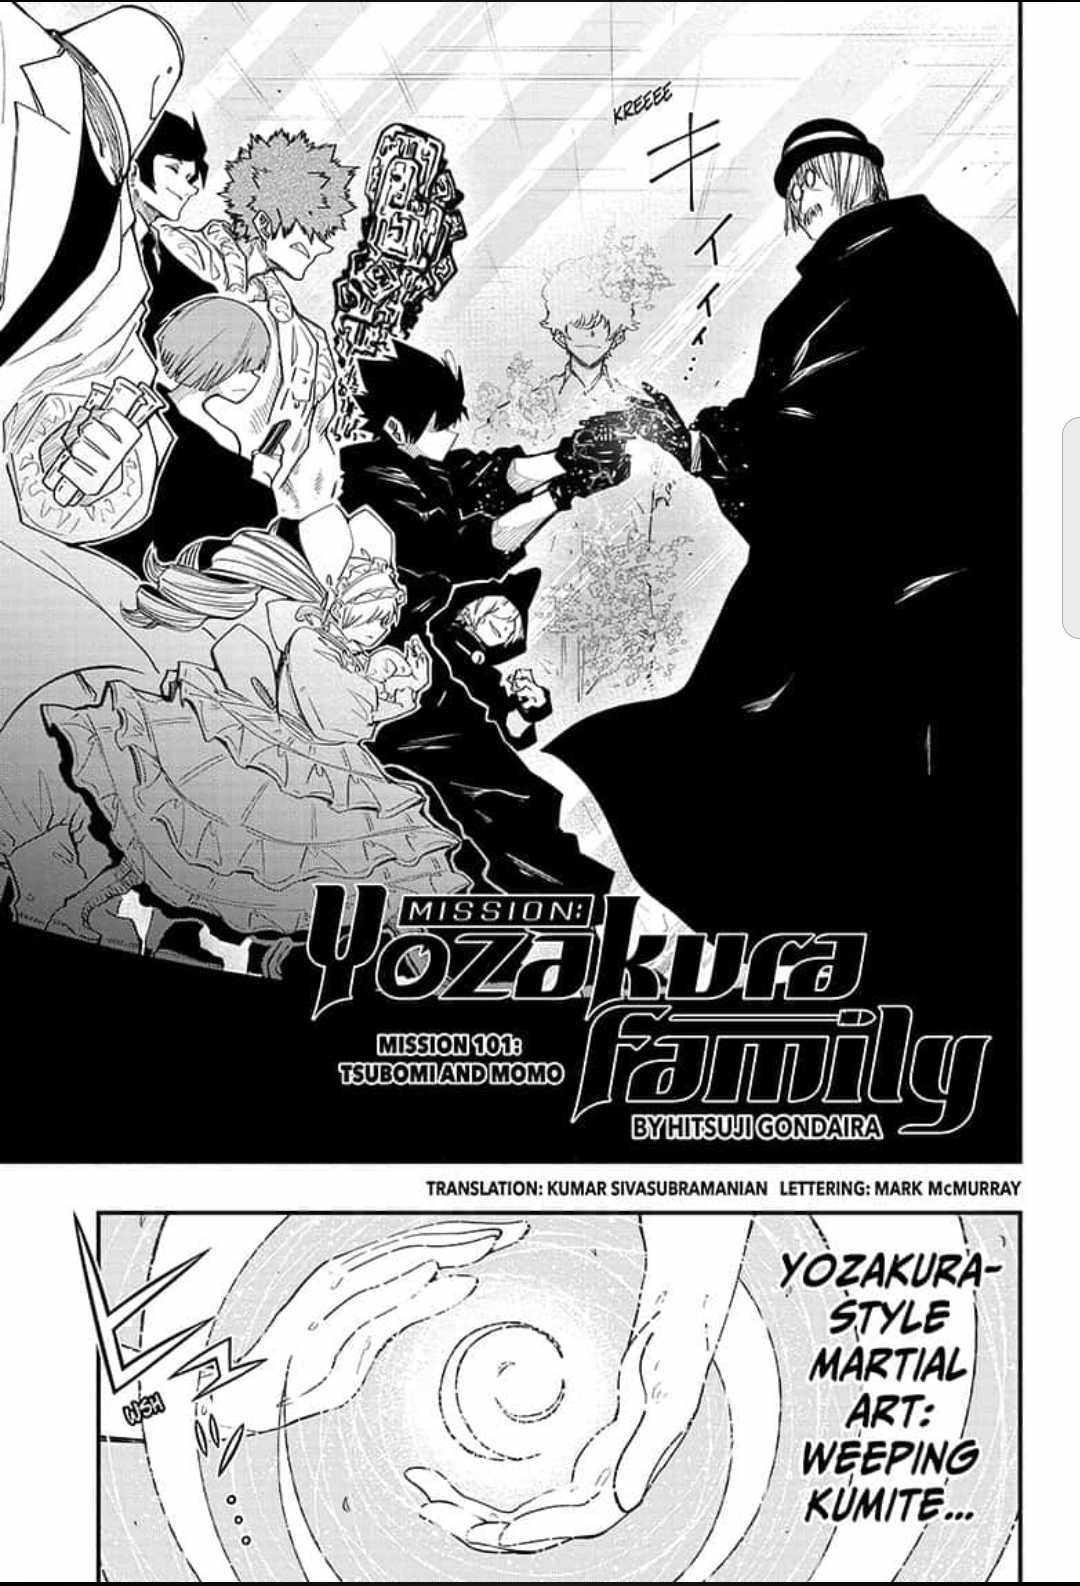 Mission: Yozakura Family Chapter 101 - Page 1